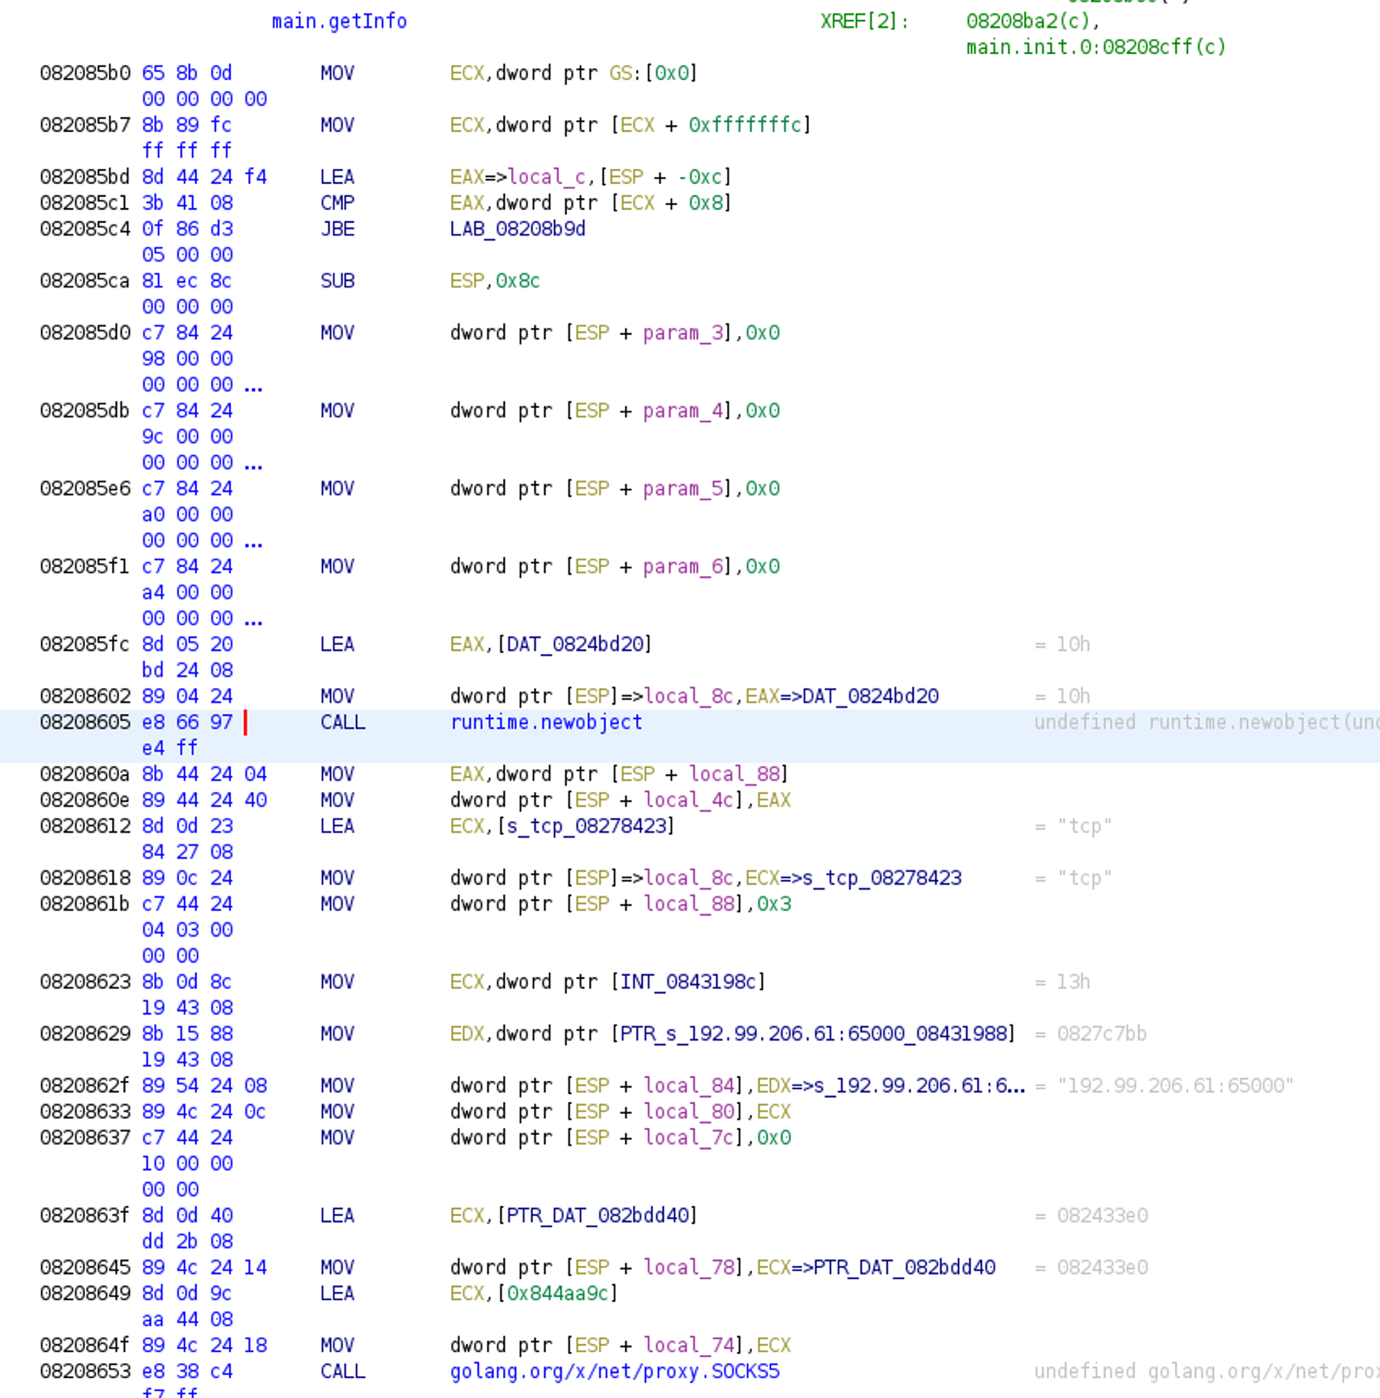 a screenshot of the ech0raix binary main.getinfo function in ghidra